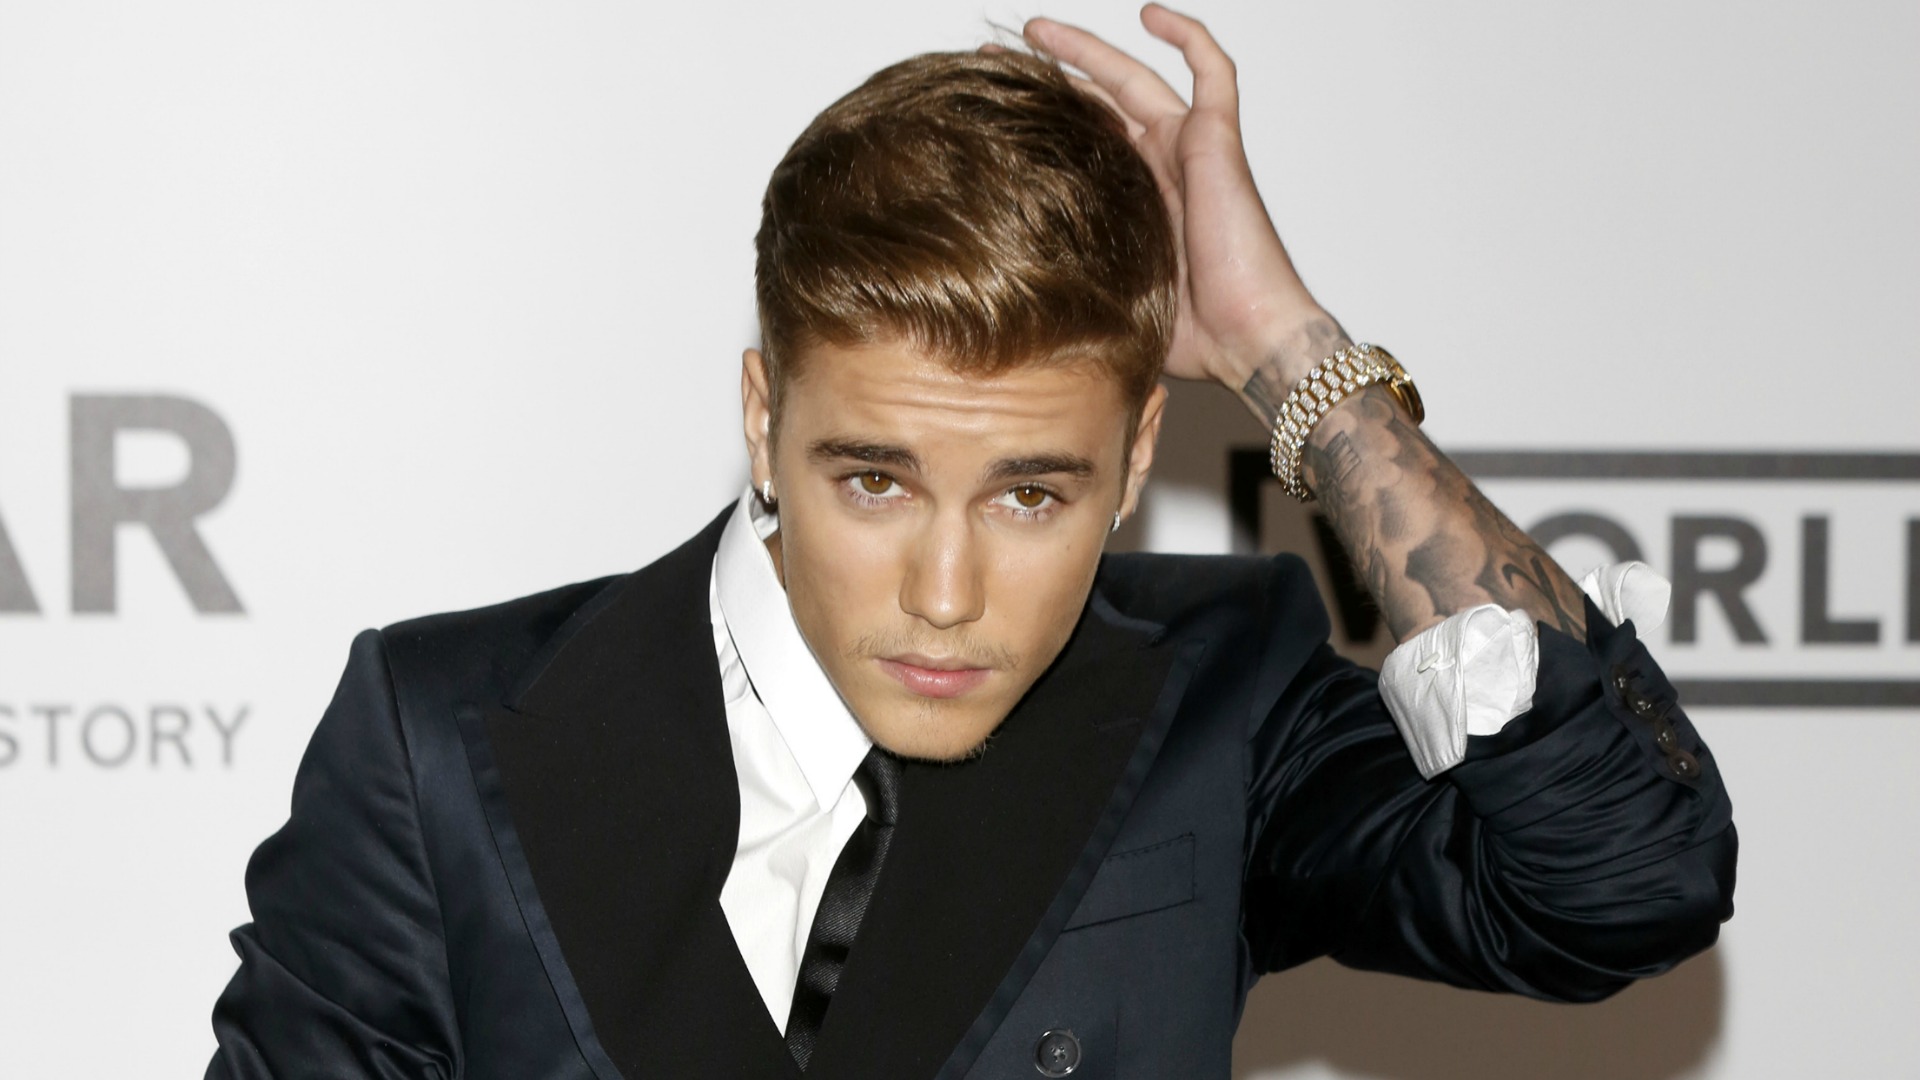 Justin-Bieber-Singer-and-Musician-06